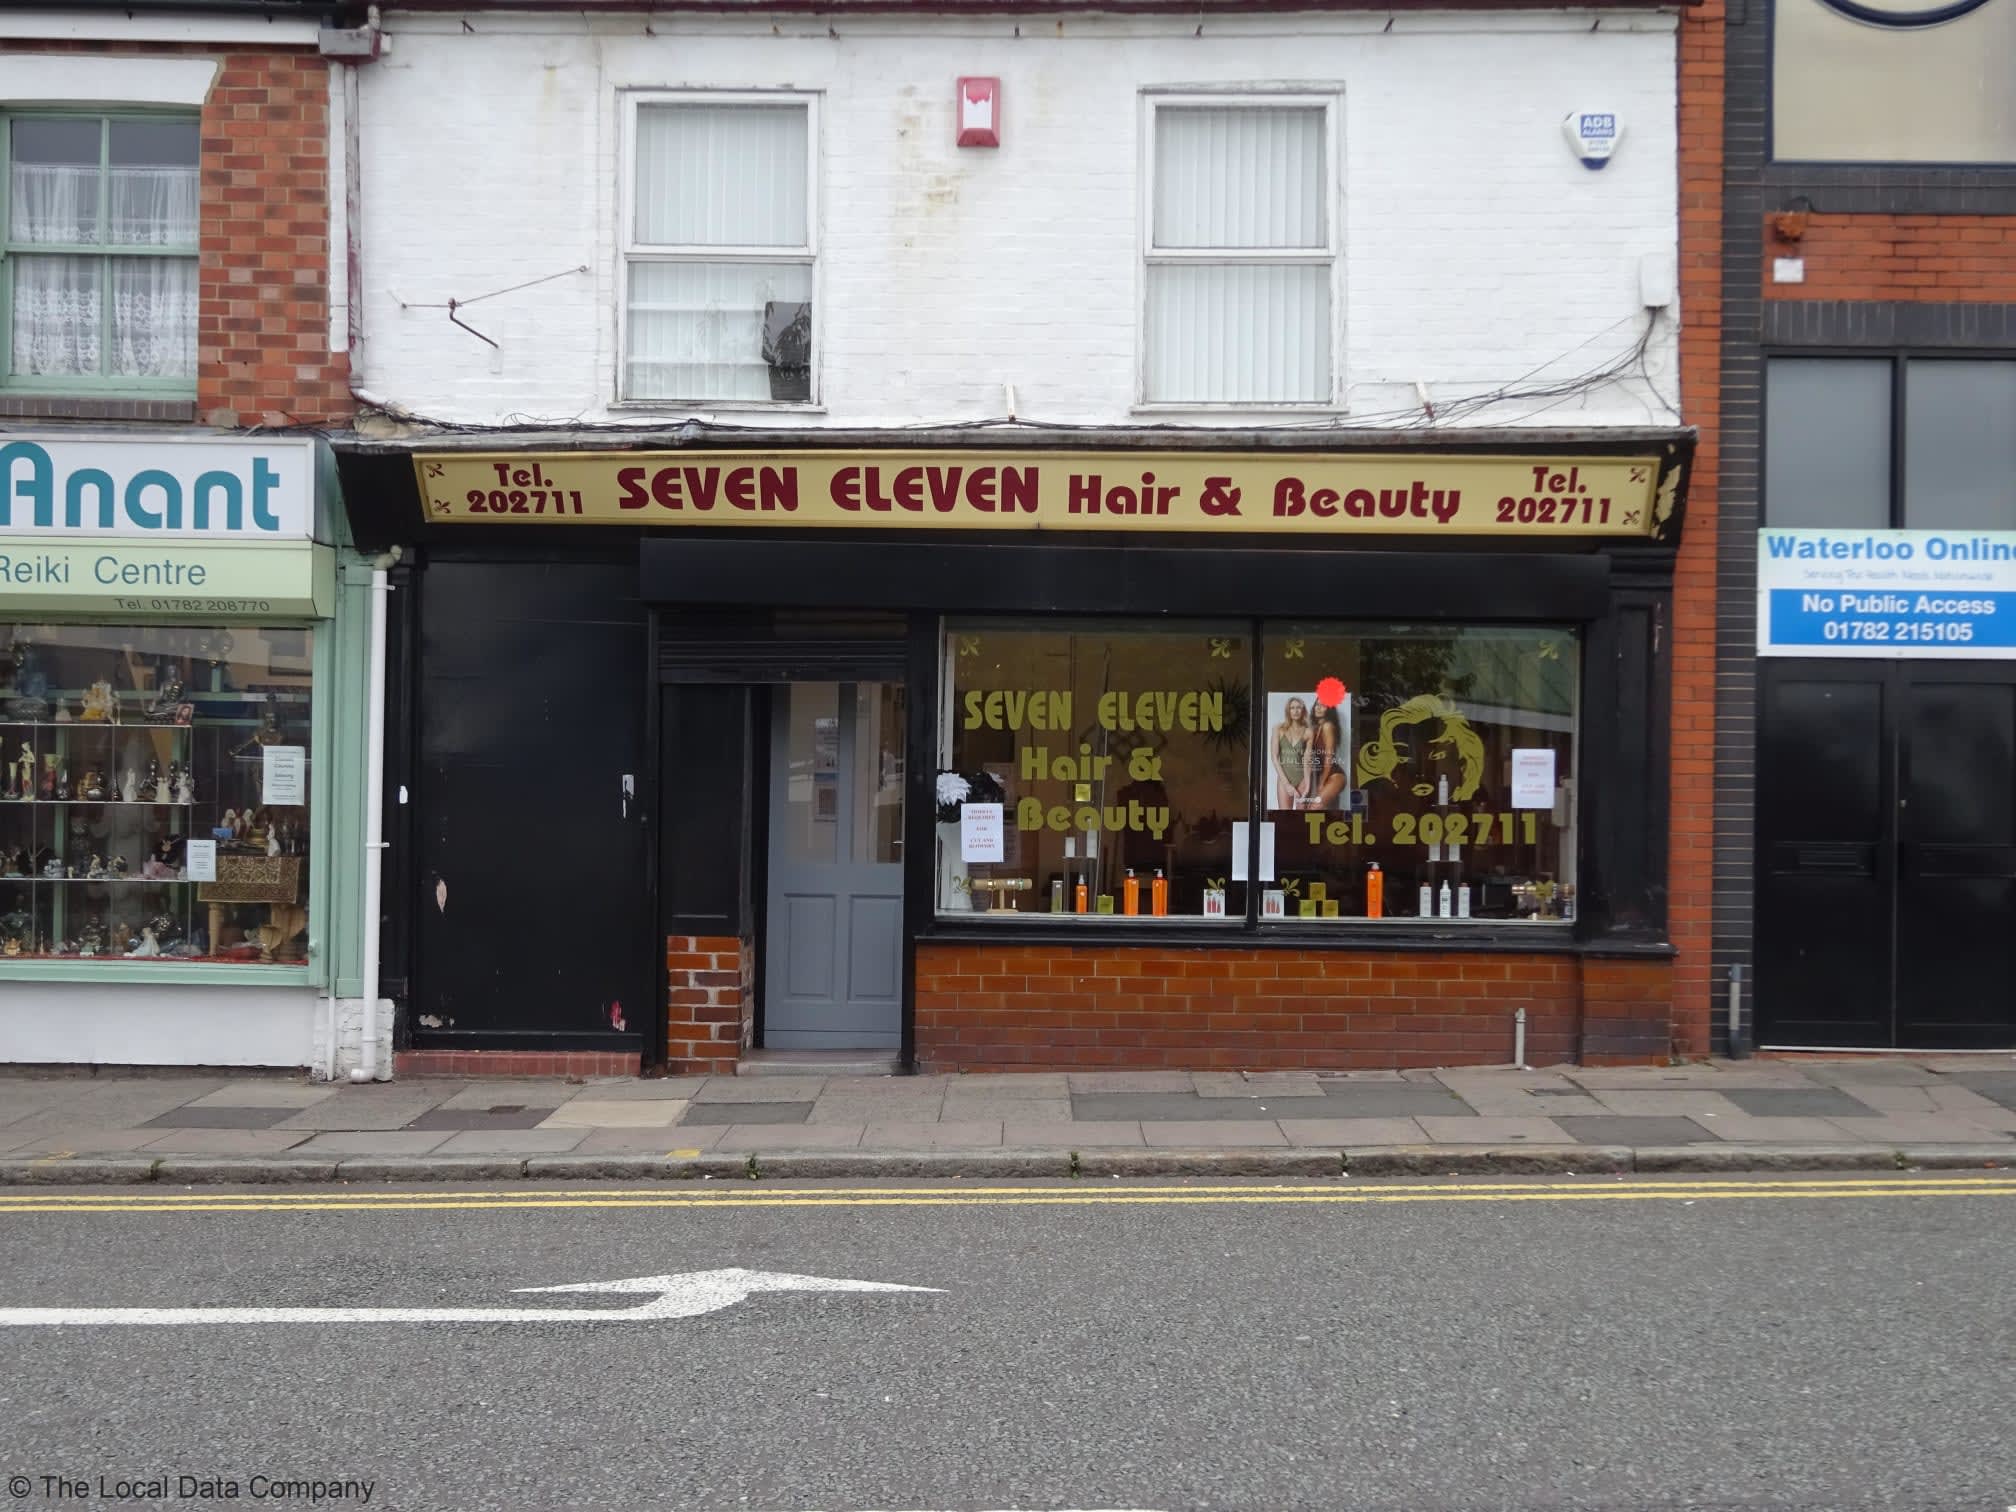 Images Seven Eleven Beauty & Hairdressing Salon